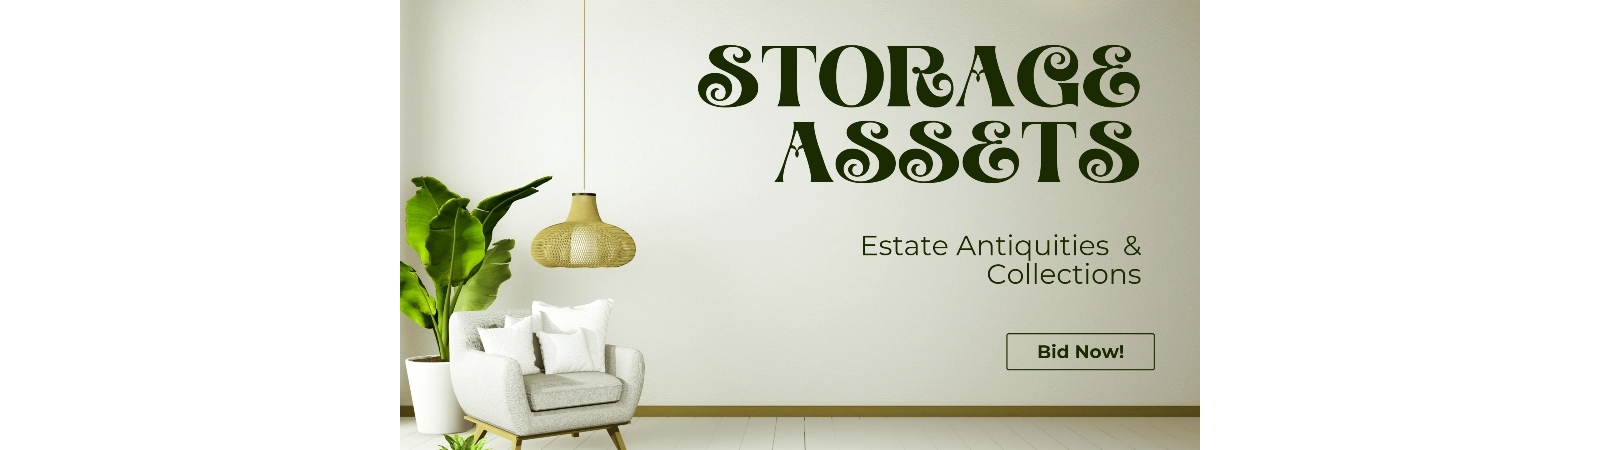 Storage Assets | Auction Ninja